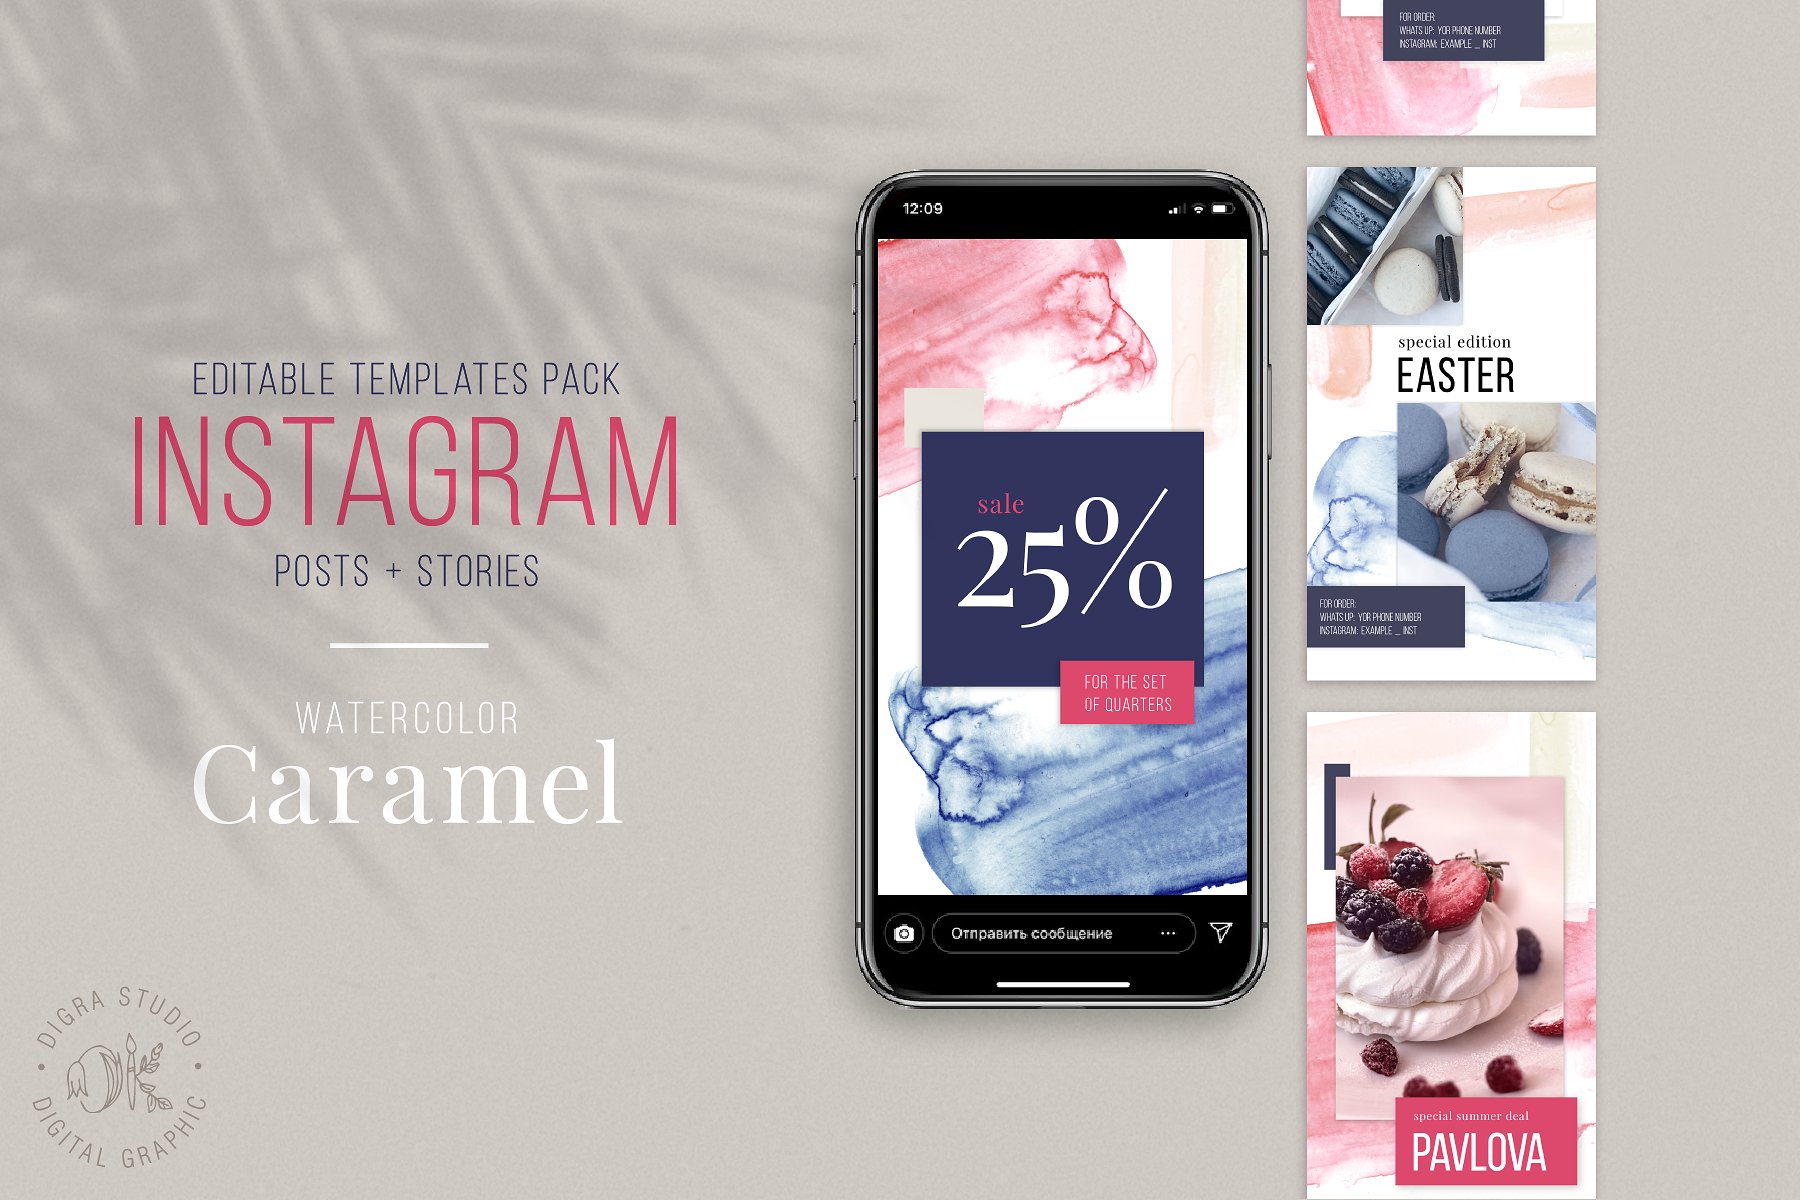 水彩风格的糕点促销海报Instagram模板 Instagram Stories And Posts Template插图